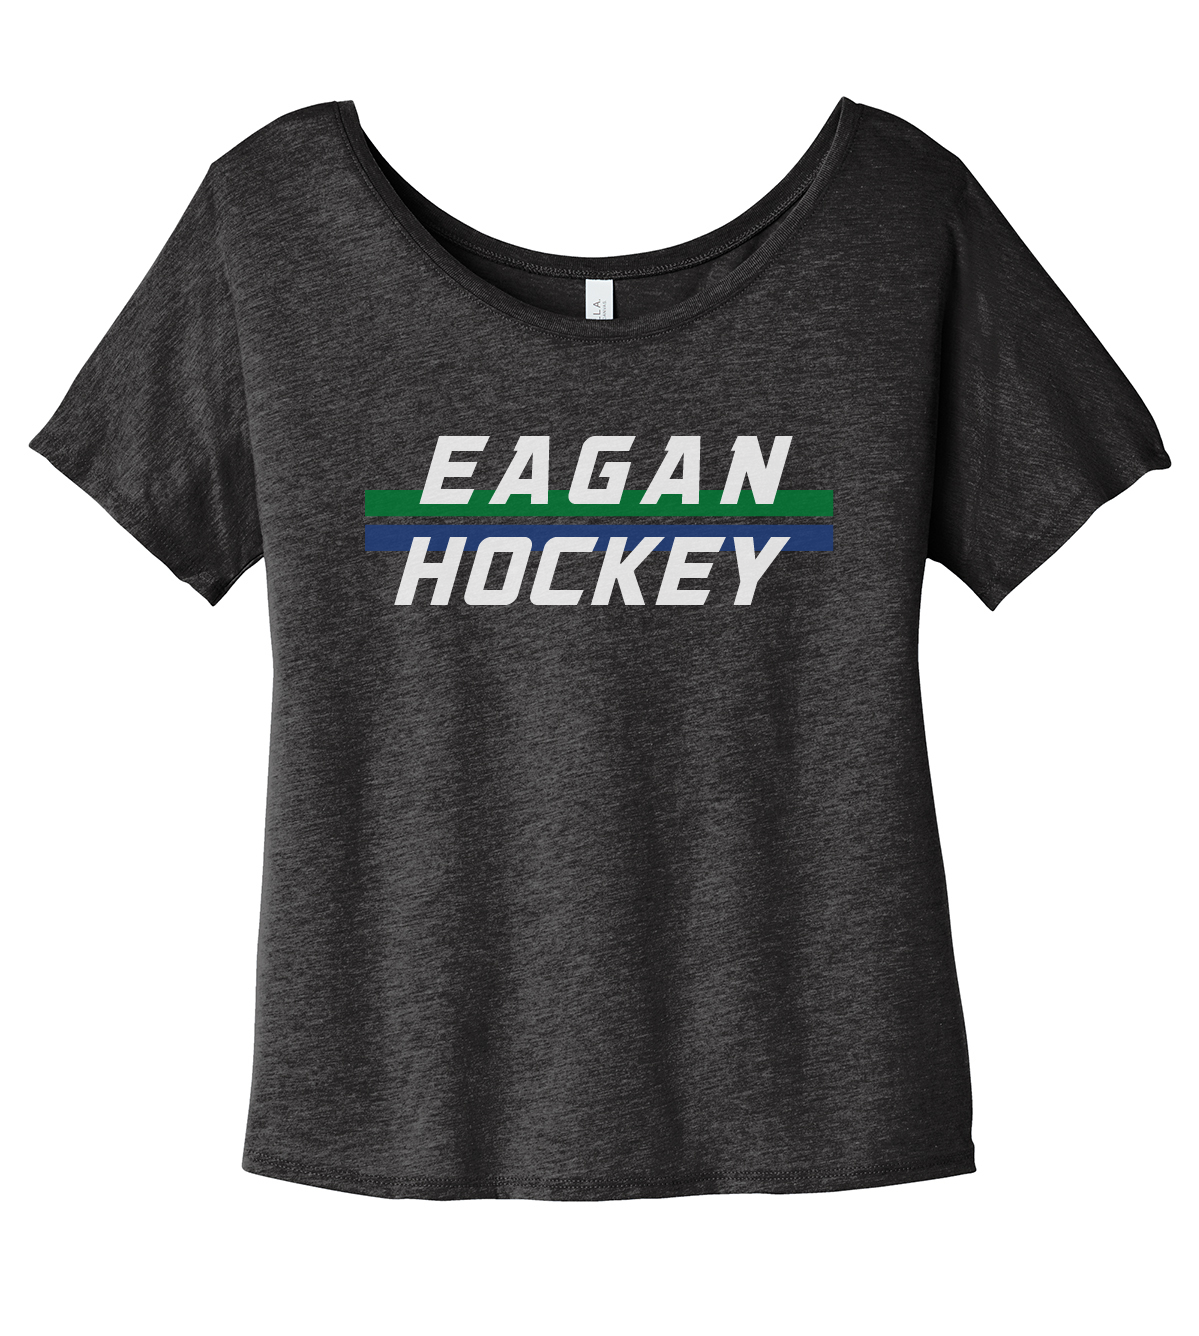 Eagan Hockey Women’s Slouchy Triblend Tee